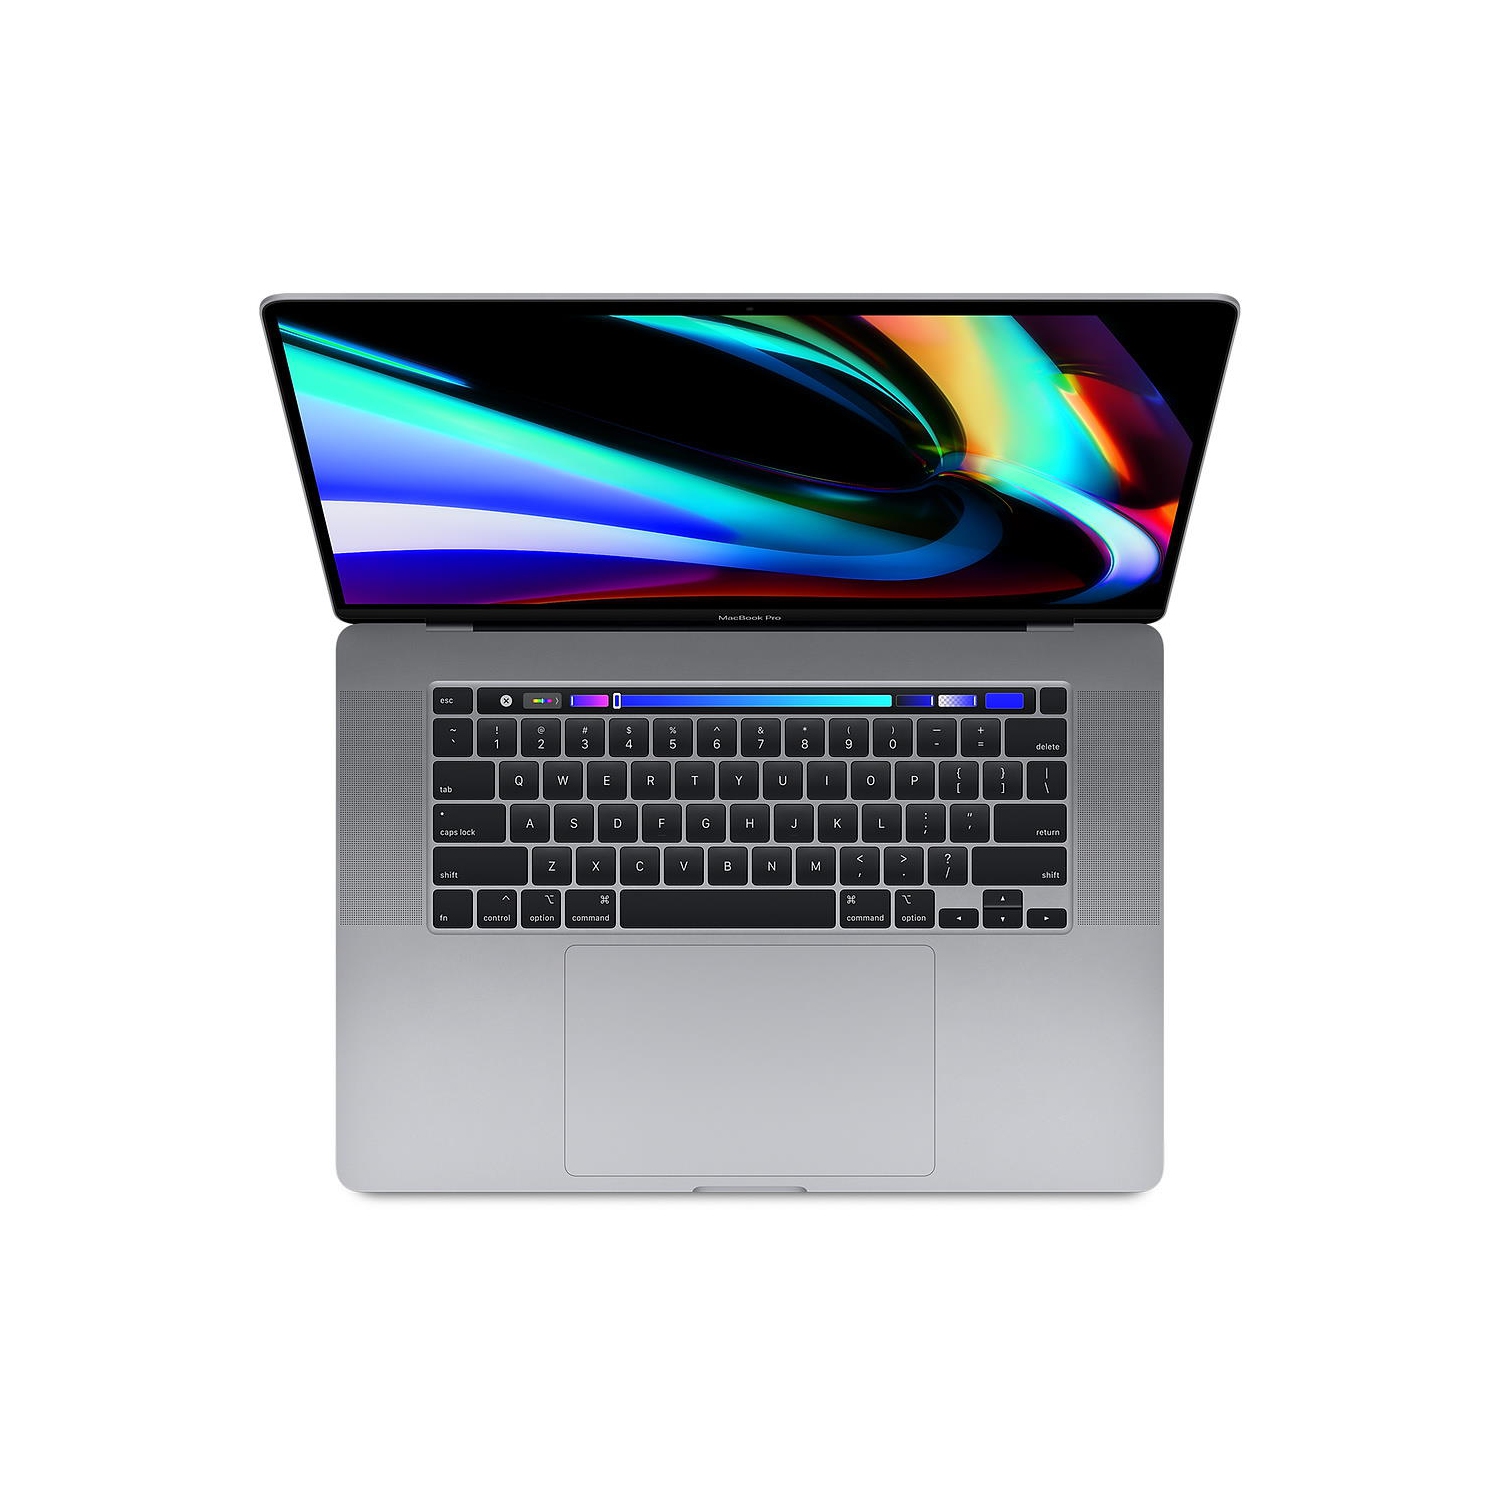 Refurbished - Excellent) Macbook Pro 16 (DG, Space Gray, TB